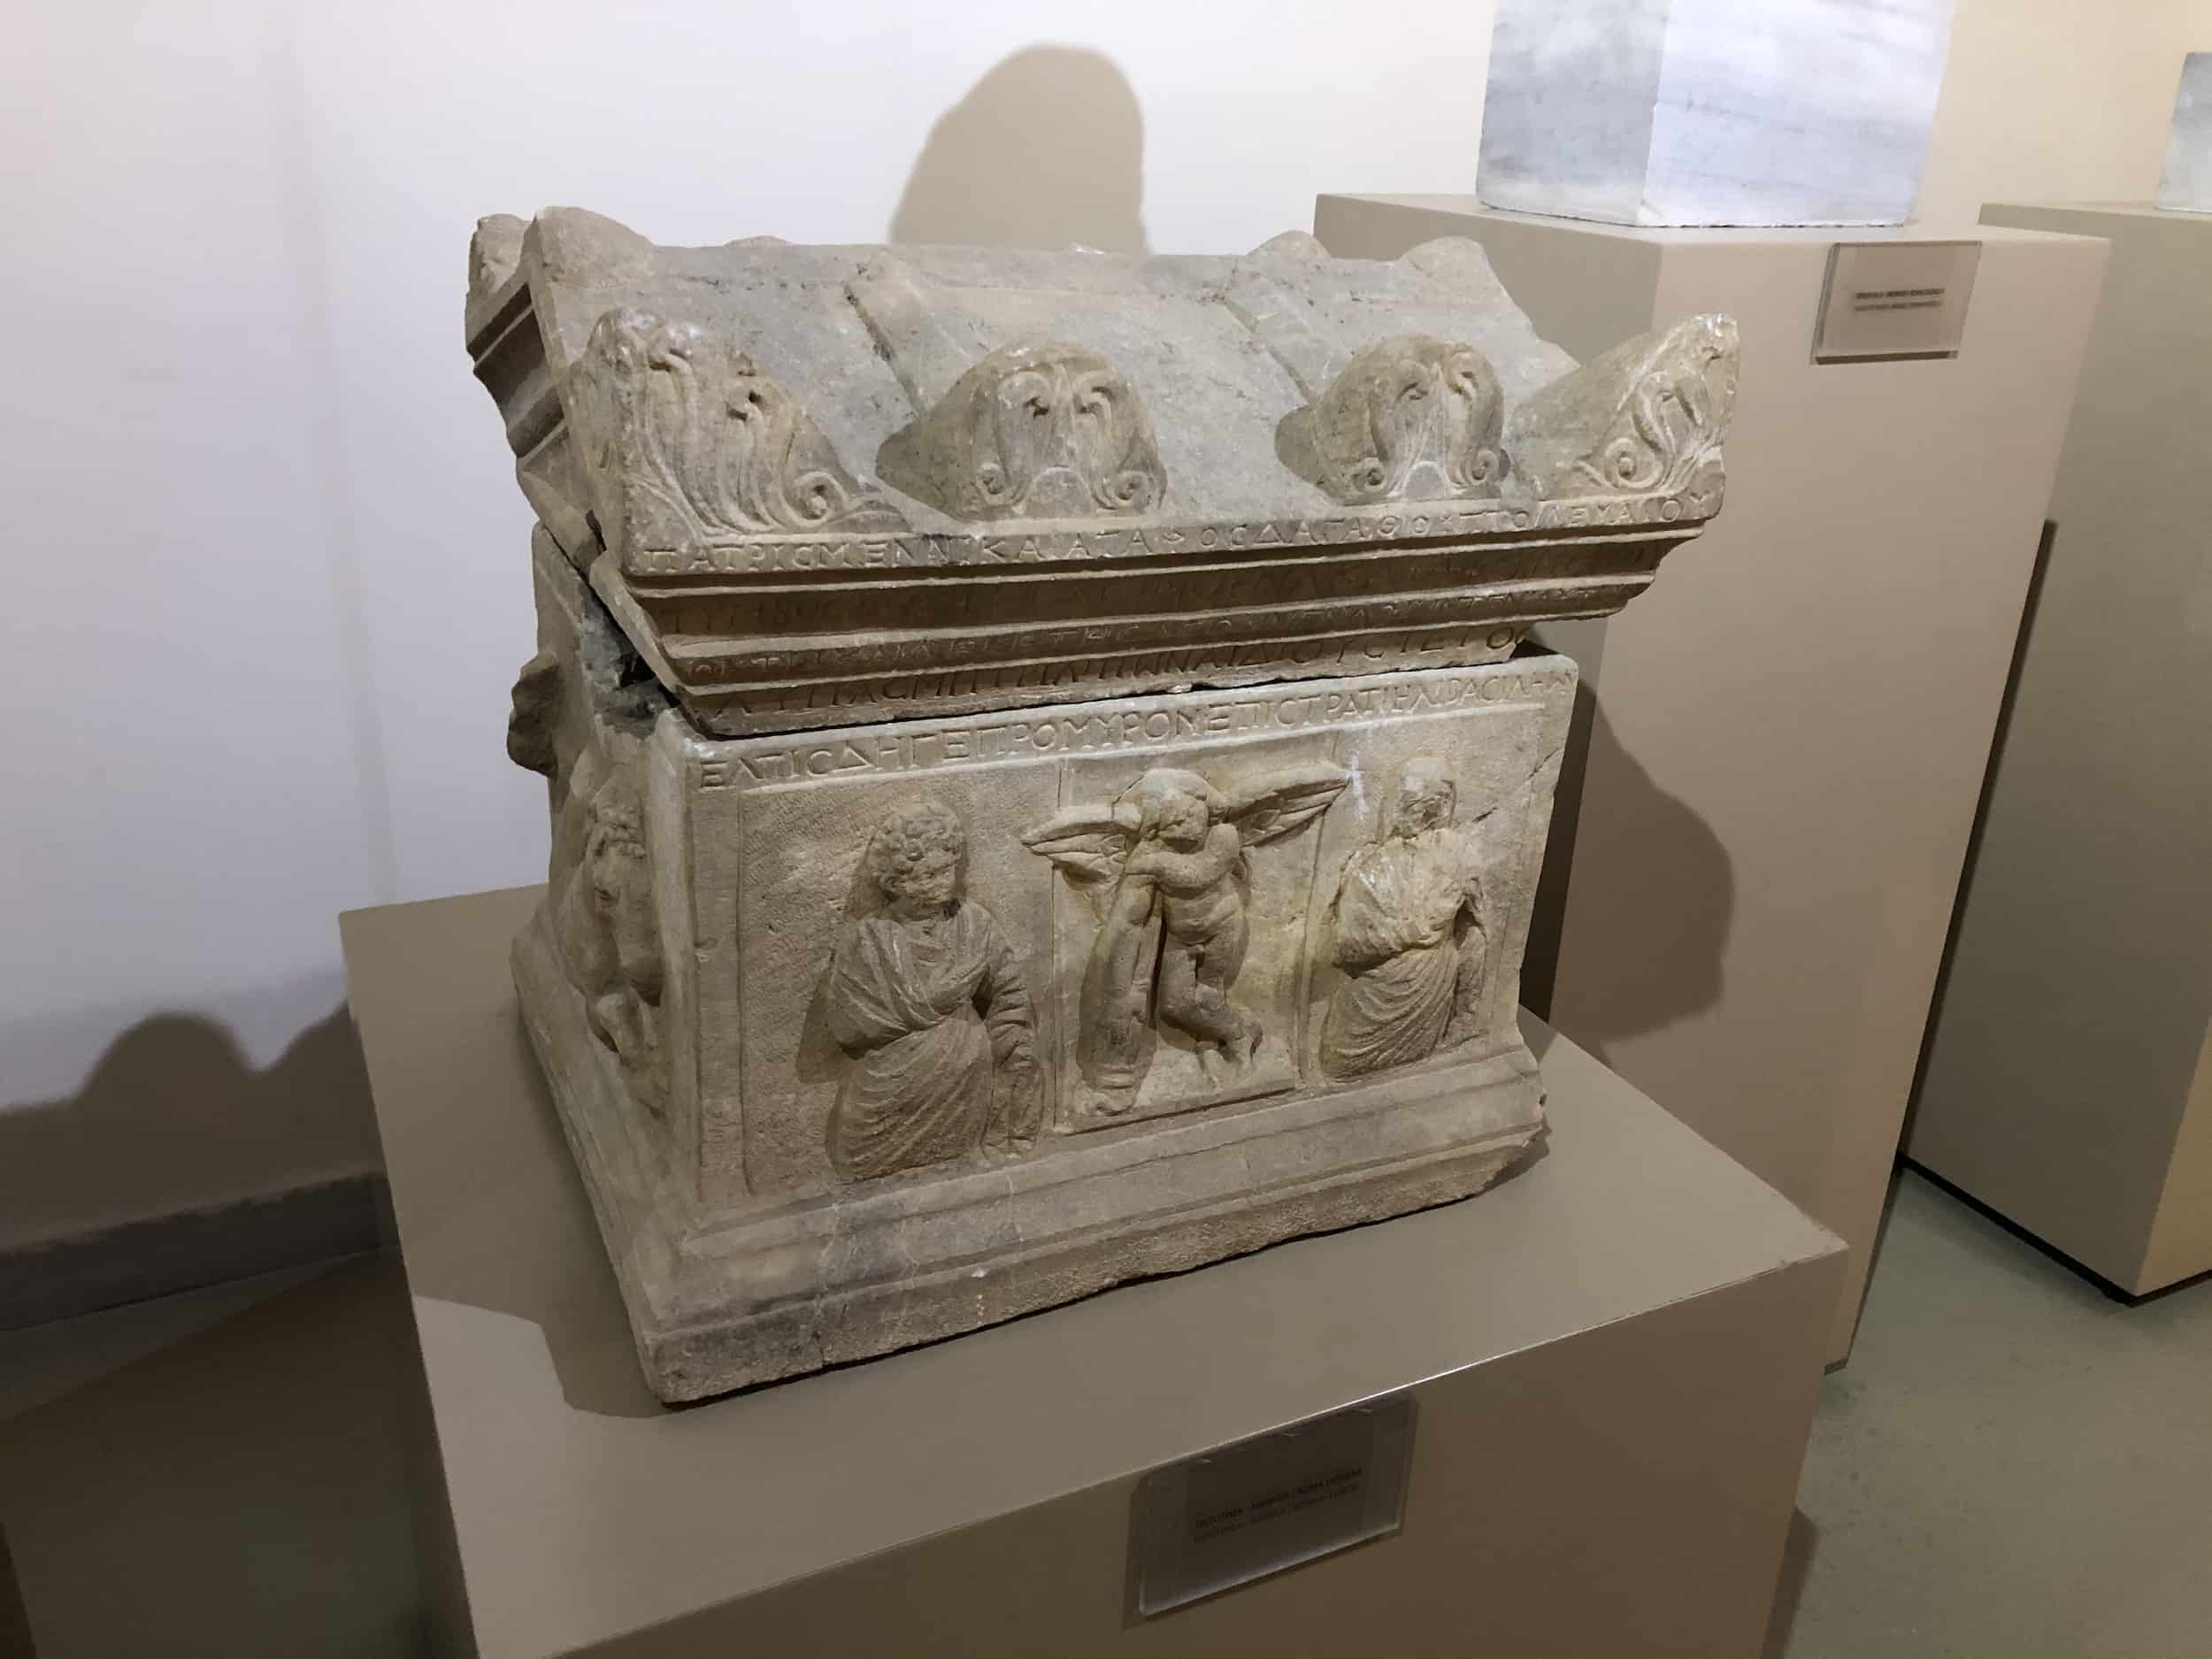 Ossuary at the Bursa Archaeological Museum in Bursa, Turkey